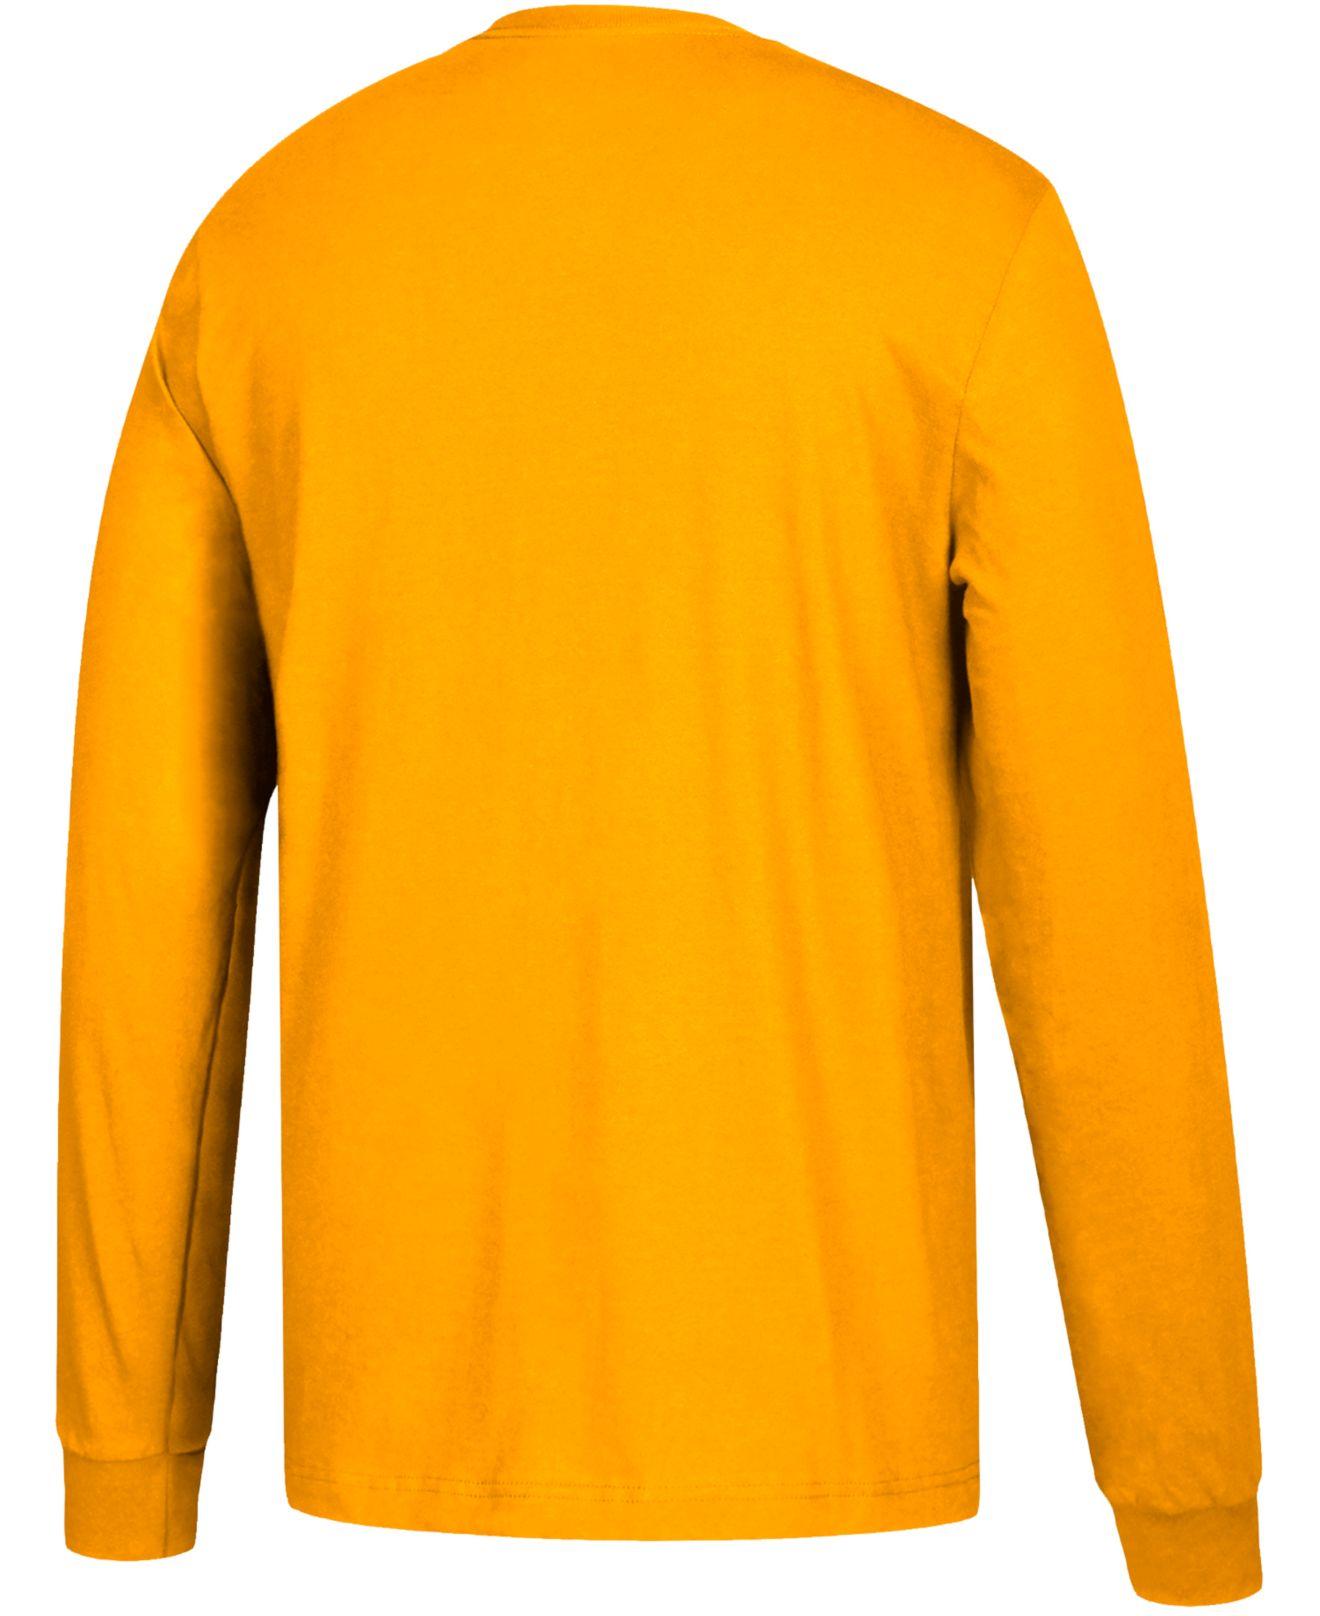 adidas Cotton Logo Long-sleeve T-shirt in Orange for Men - Lyst